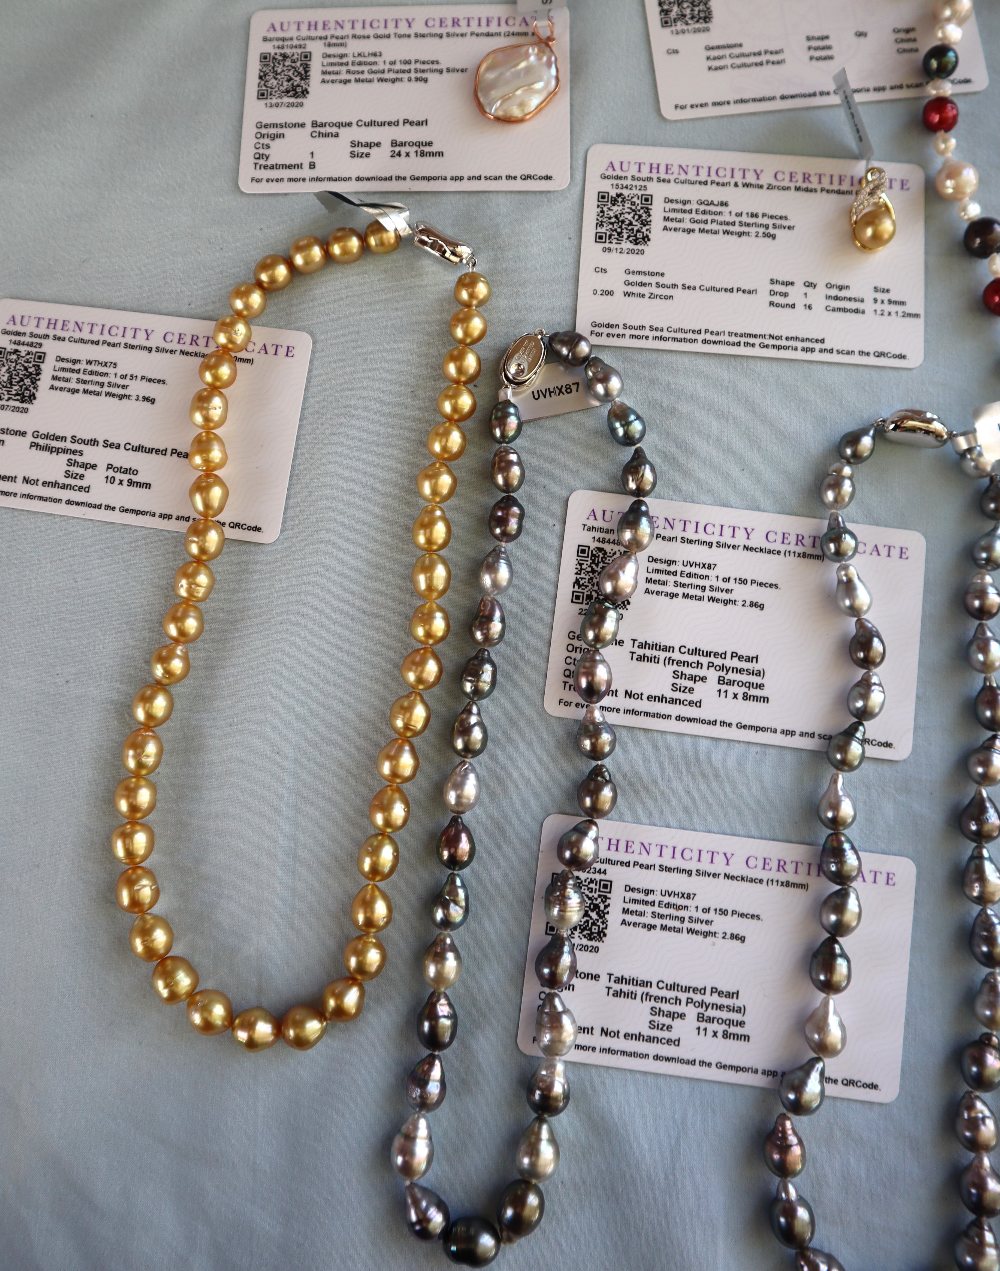 Gemporia - A Multi-colour Kaori cultured pearl necklace, - Image 4 of 5